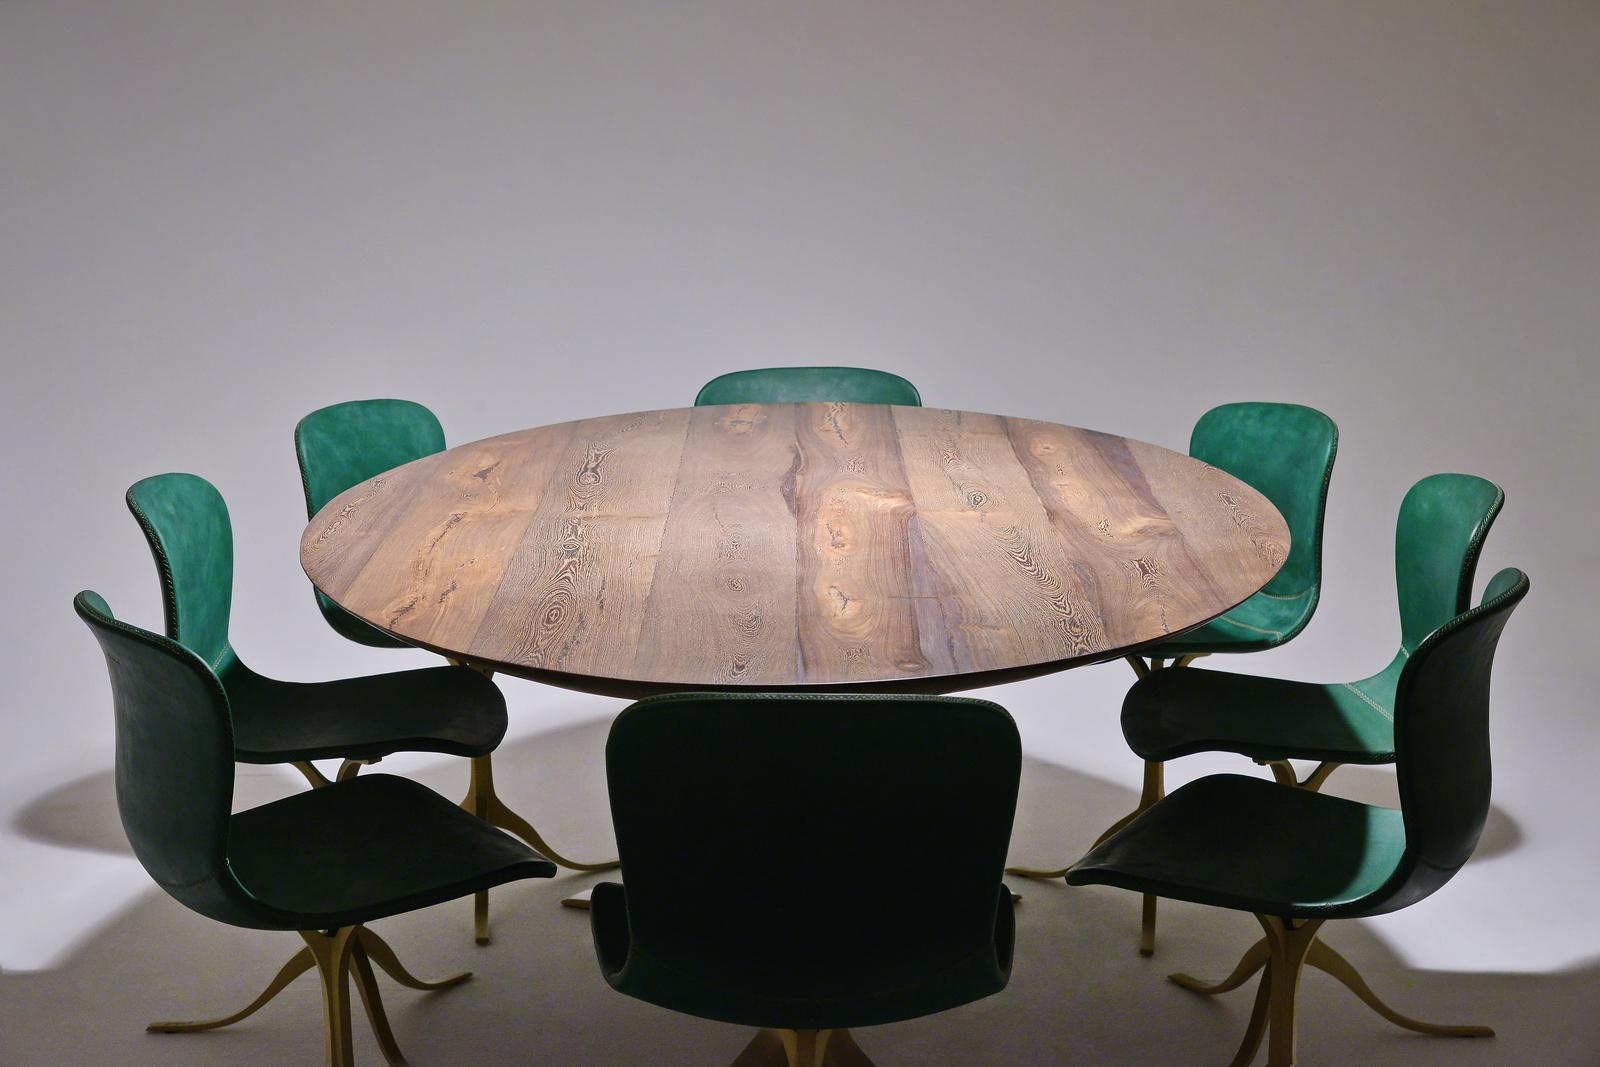 Cast Bespoke Oval Table, Reclaimed Hardwood, Brown Brass Base, P. Tendercool In stock For Sale